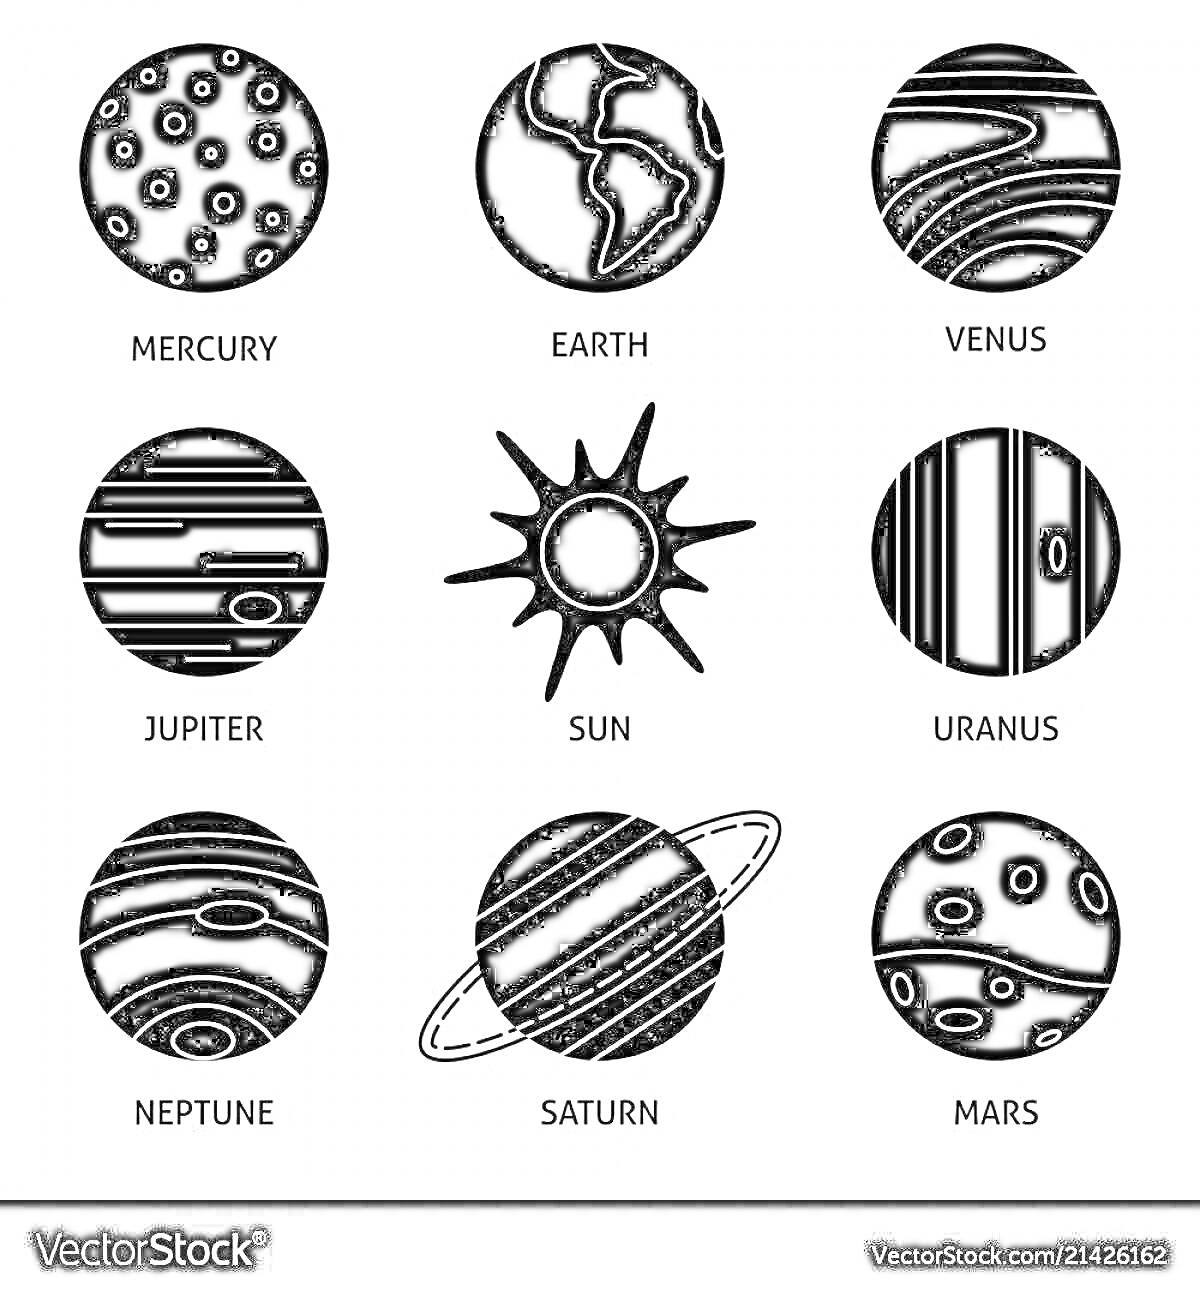 Раскраска Меркурий планета с элементами на фото, такие как: Меркурий, Земля, Венера, Юпитер, Солнце, Уран, Нептун, Сатурн, Марс